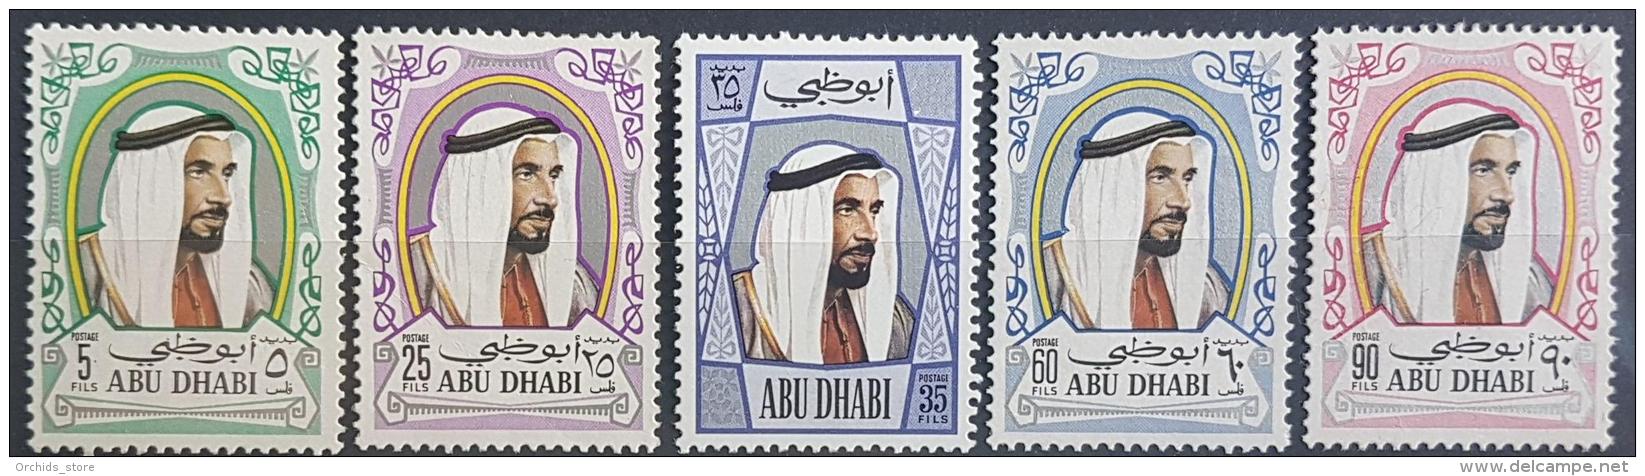 HX35 - Abu Dhabi 1970 MNH Stamps - 5f, 25f, 35f, 60f, 90f - Abu Dhabi